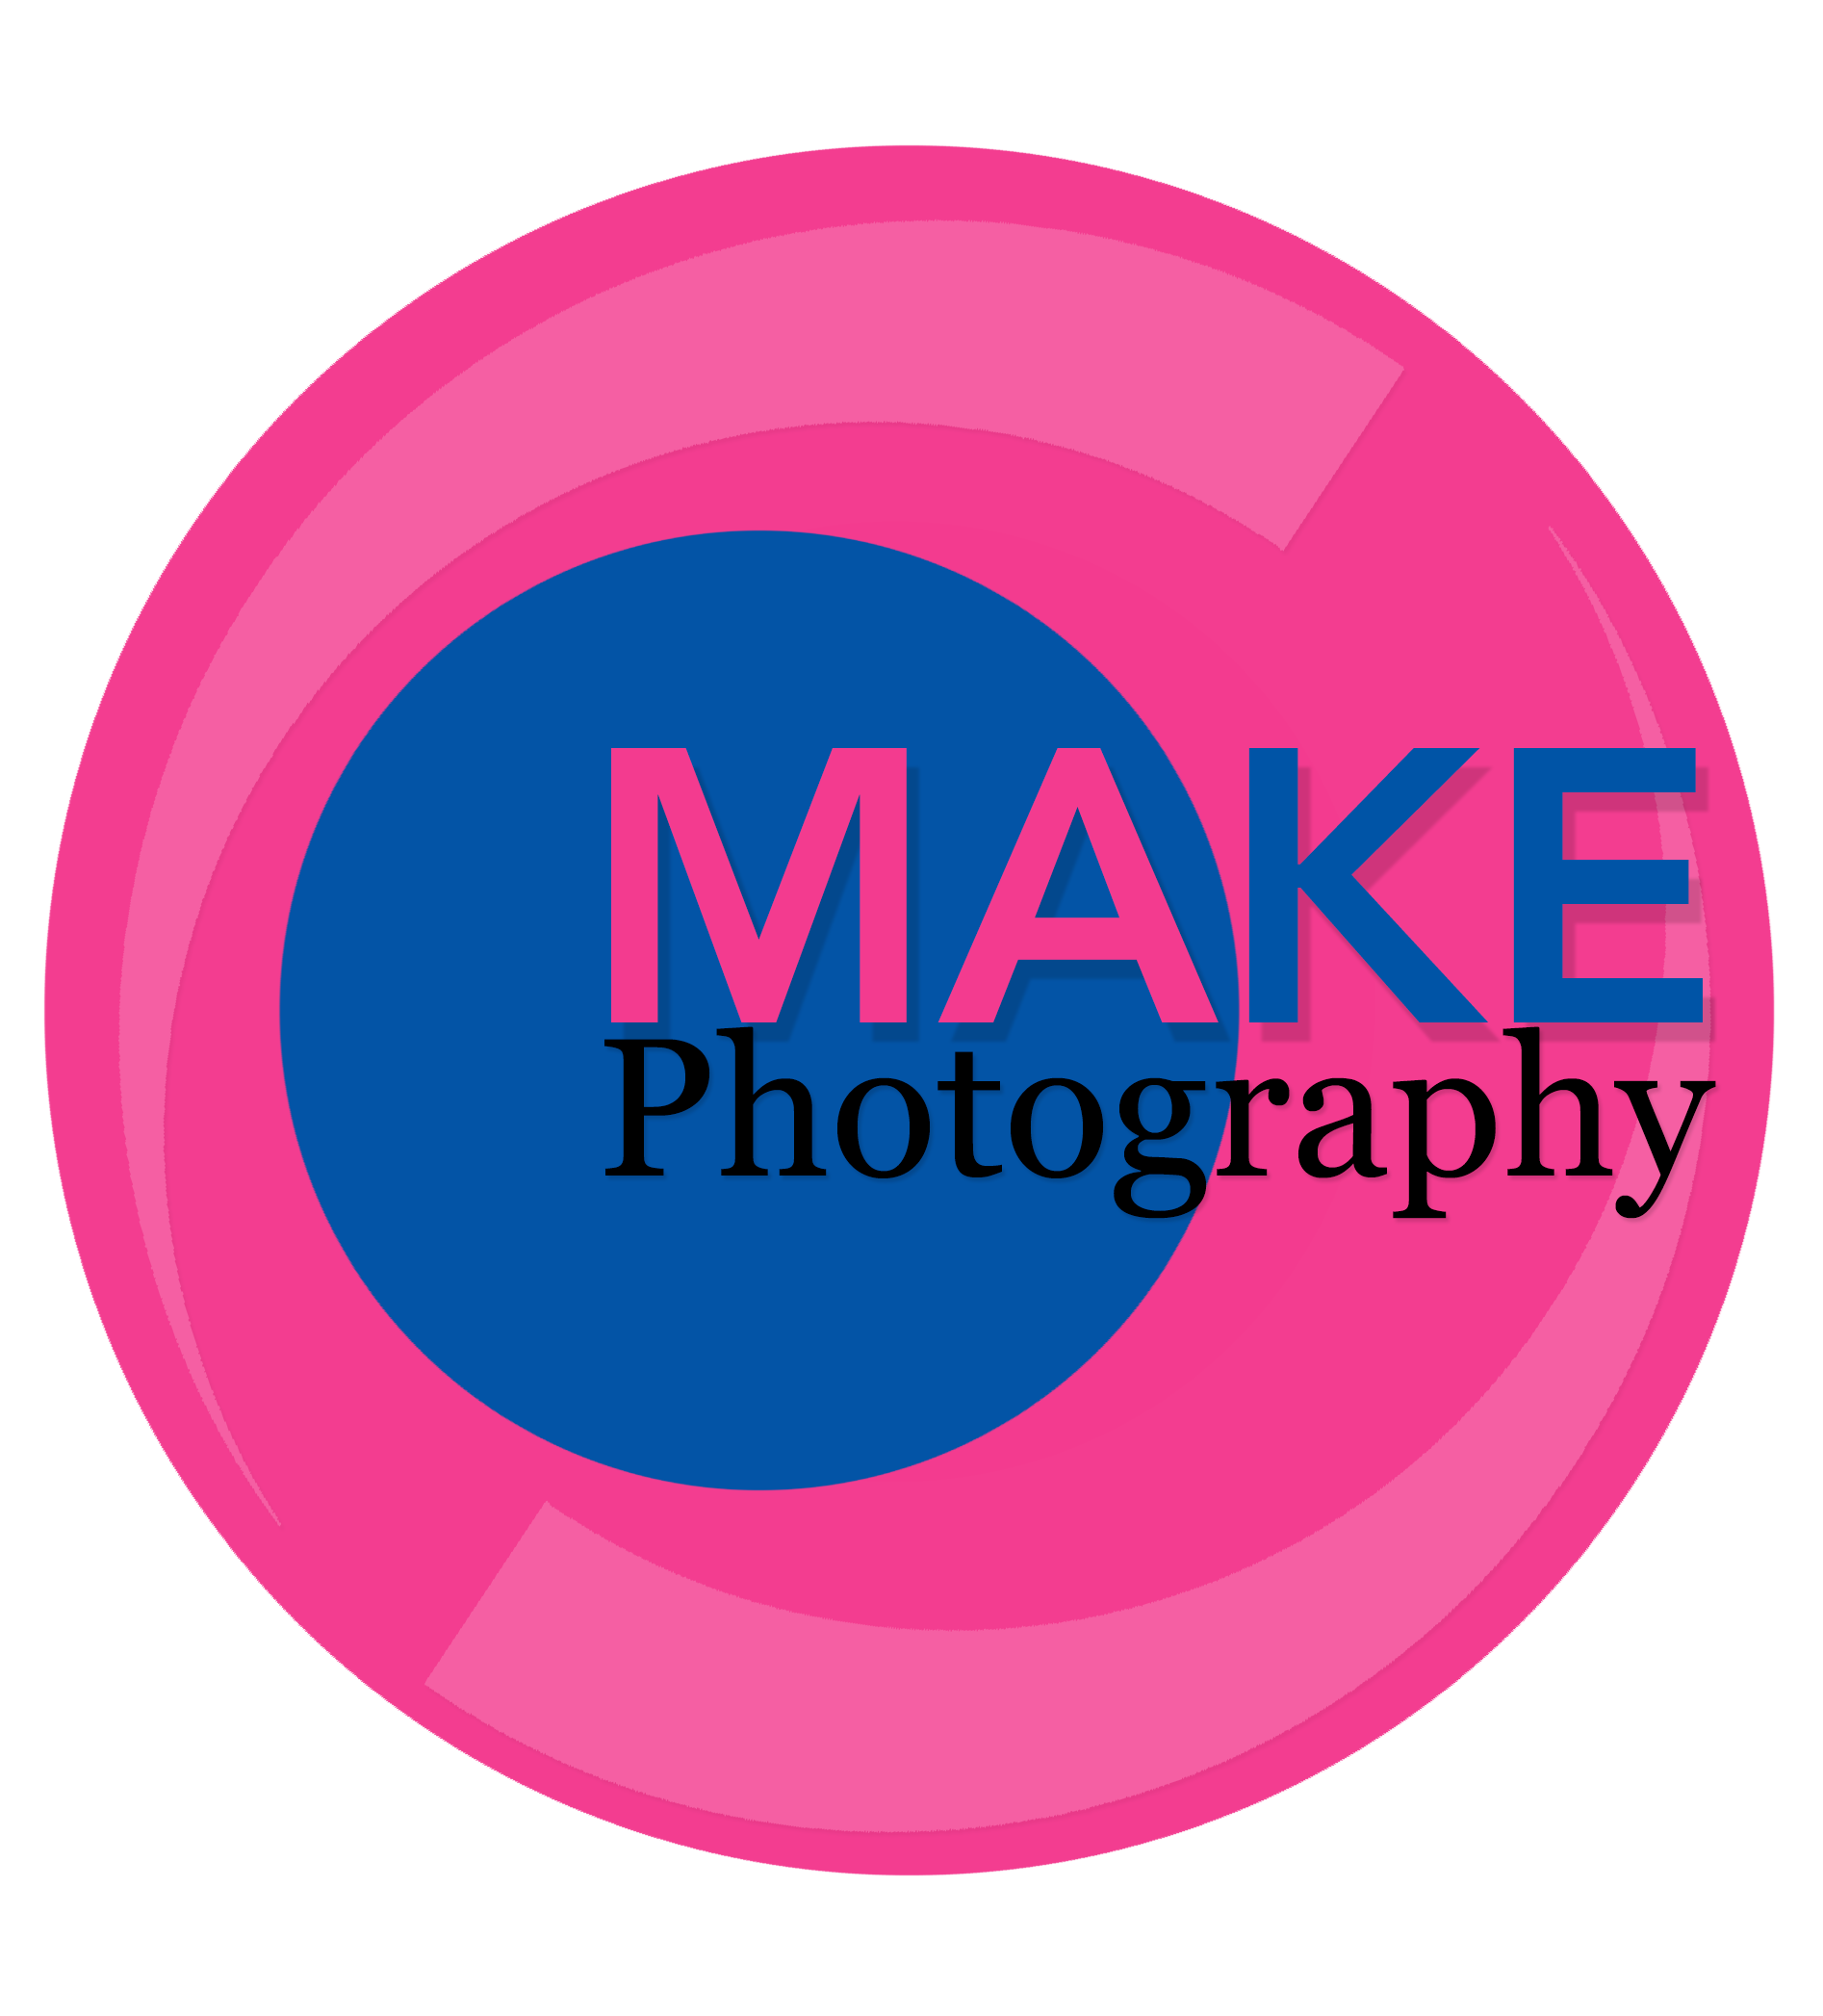 MAKE Photography